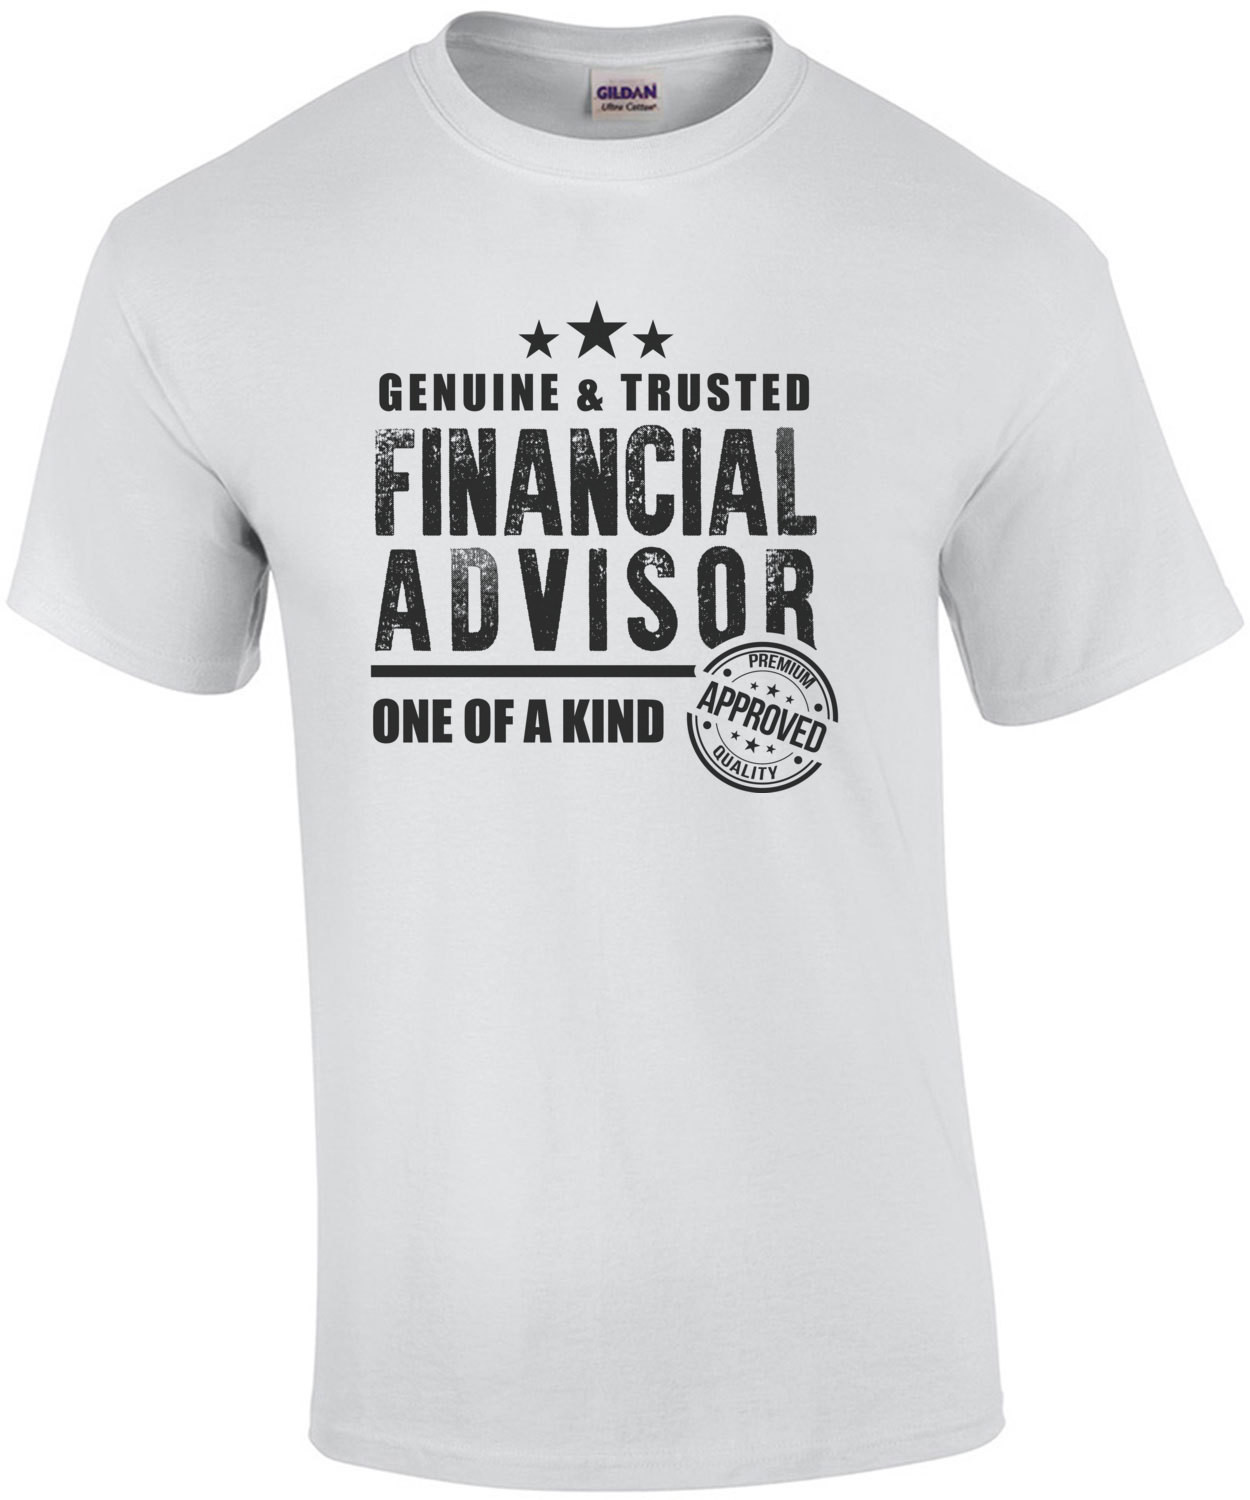 Genuine & Trusted Financial Advisor - One of a kind - Funny Financial Advisor T-Shirt